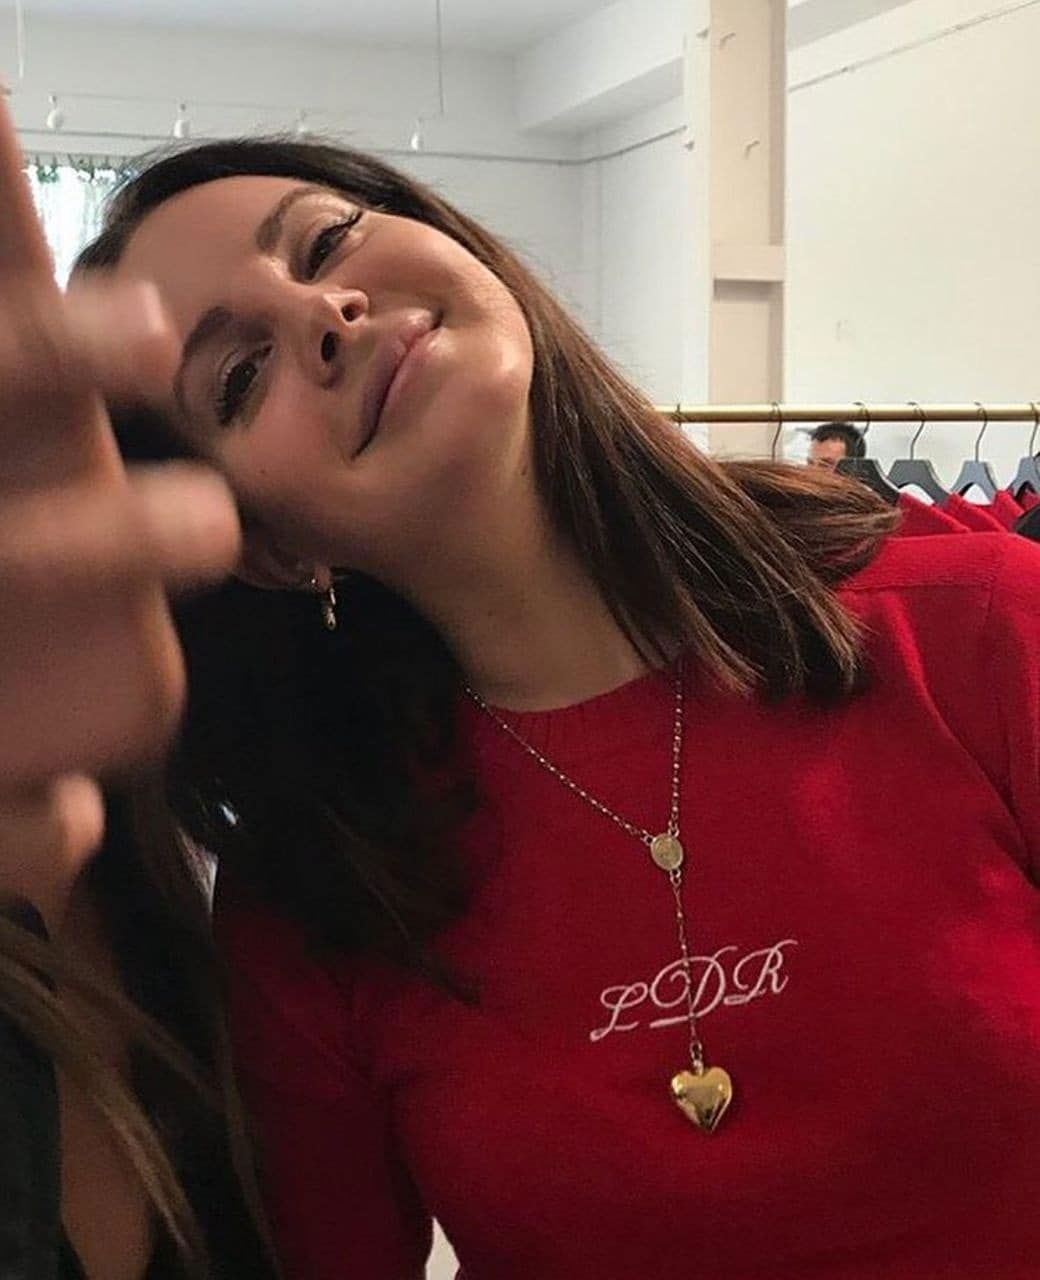 Lana Del Rey's Iconic Necklace